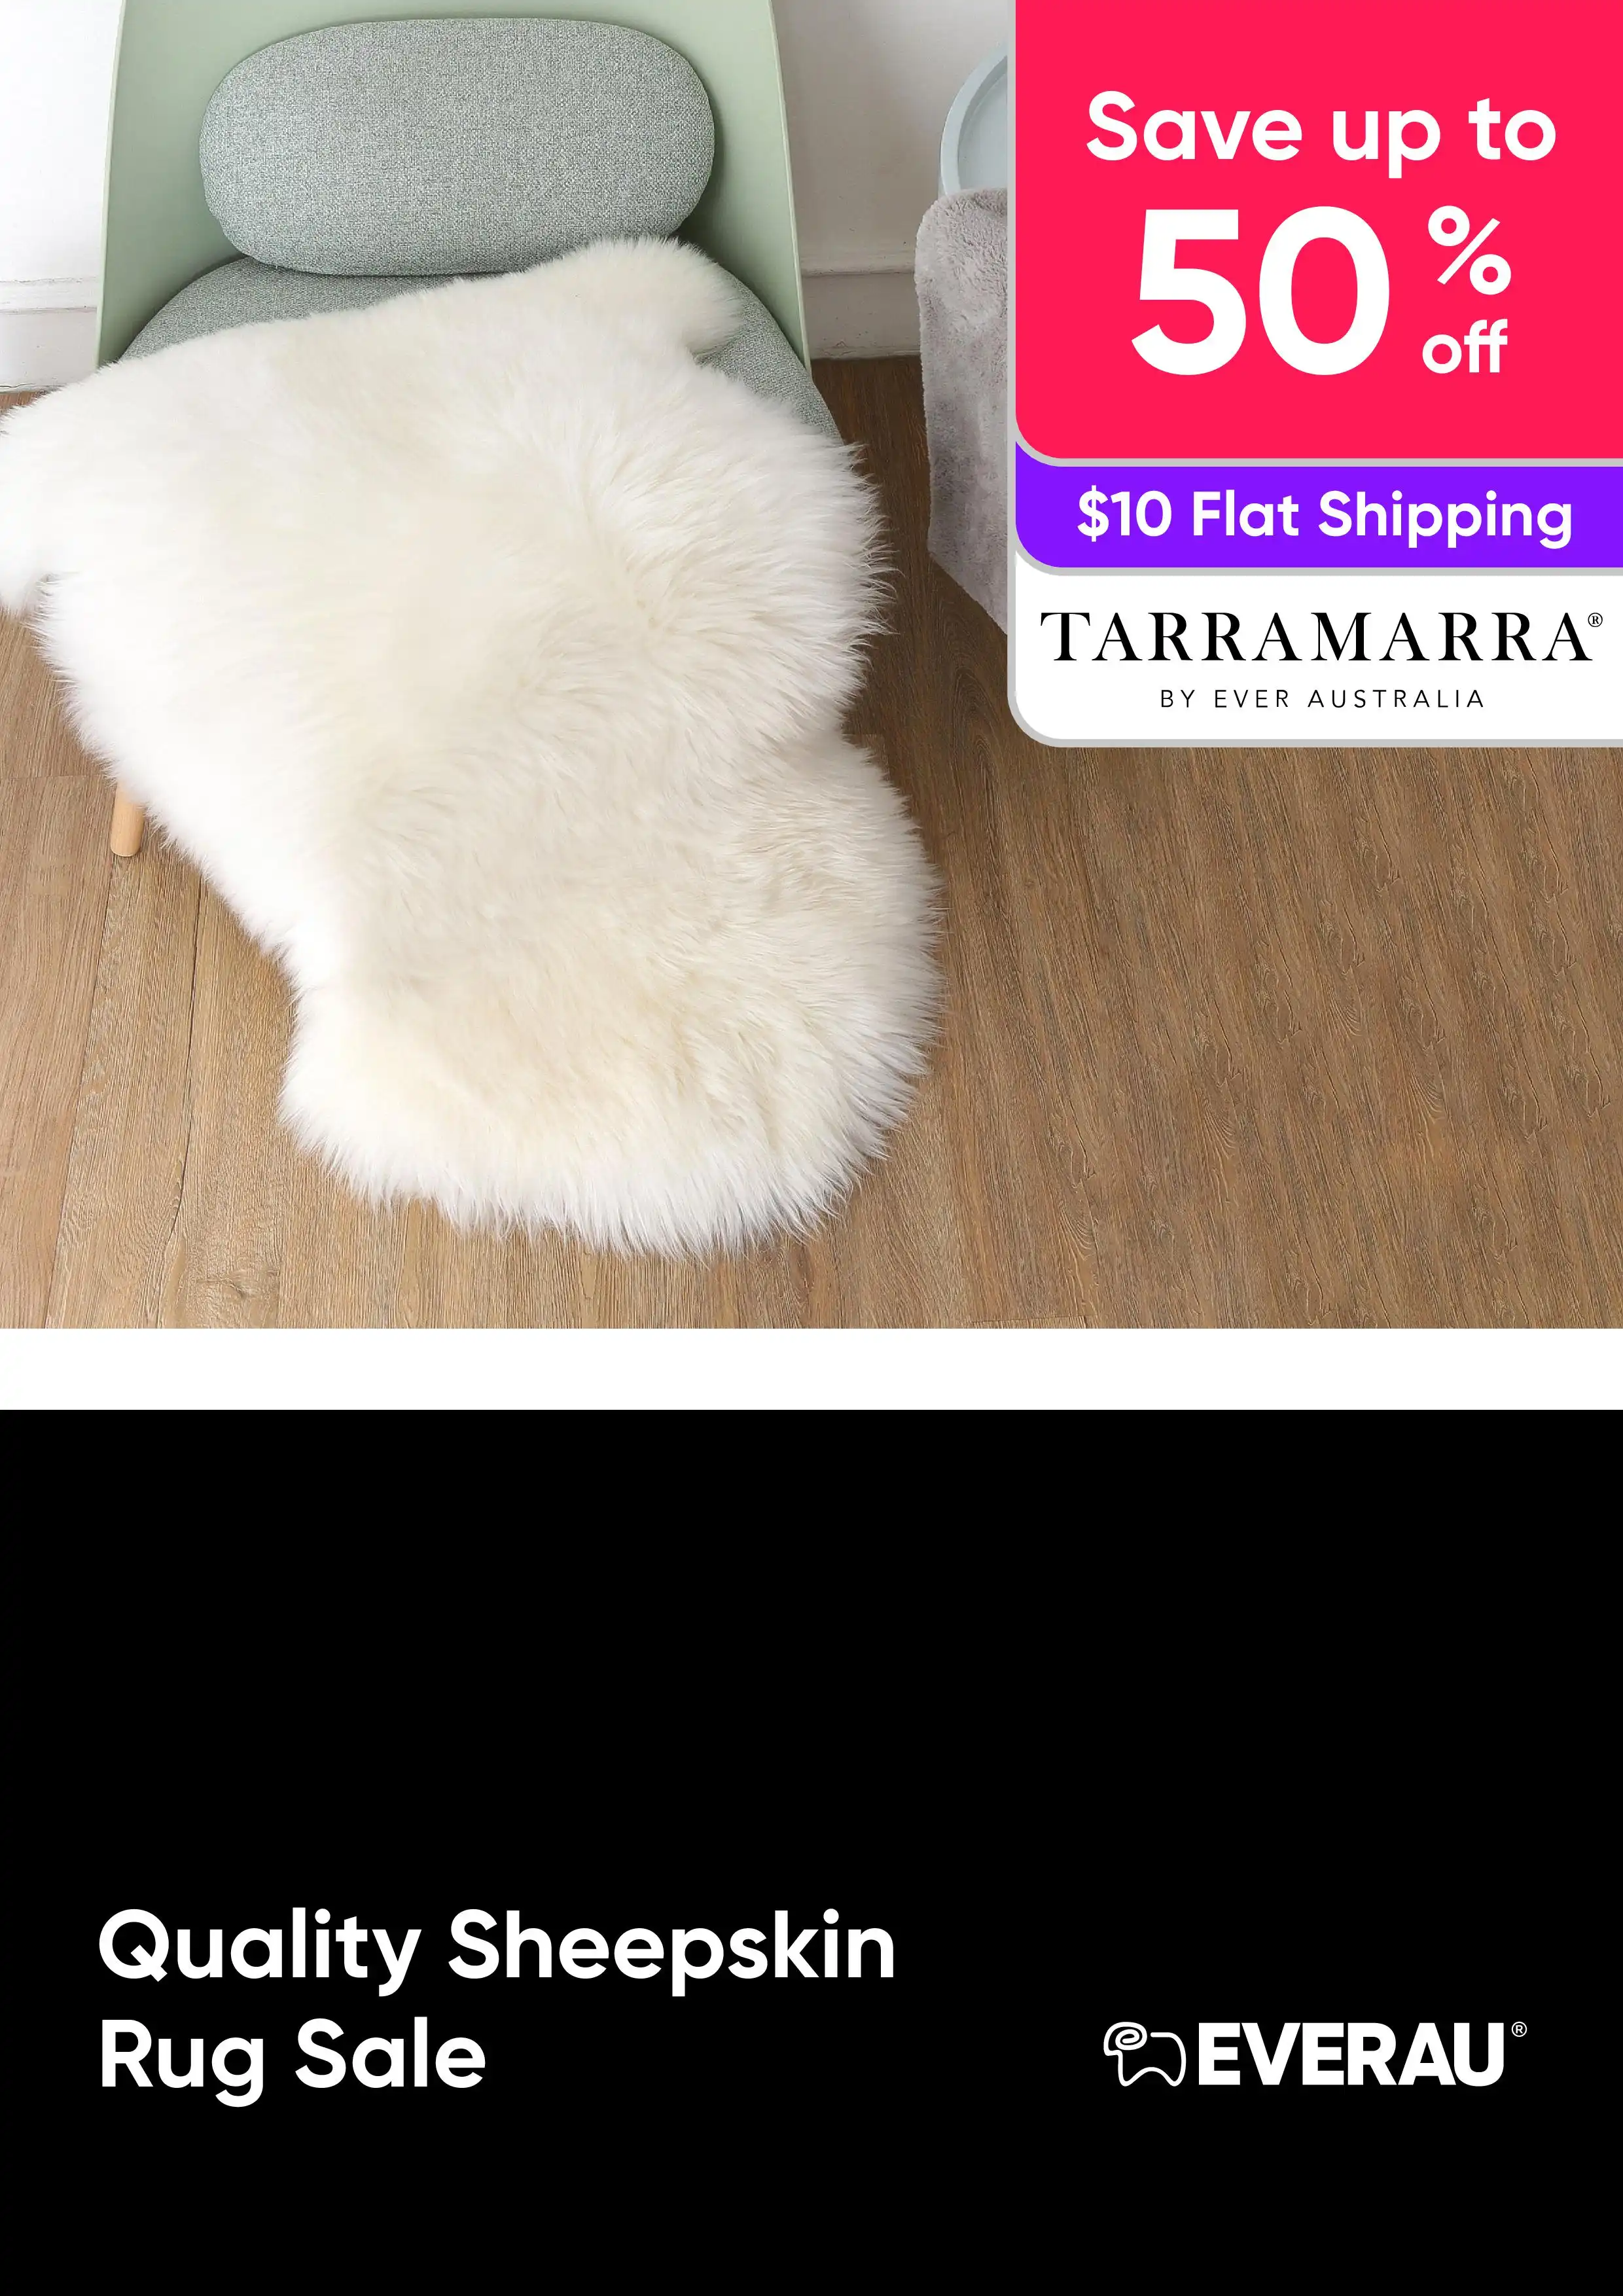 Quality Sheepskin Rug Sale - Tarramarra - Save up 50%